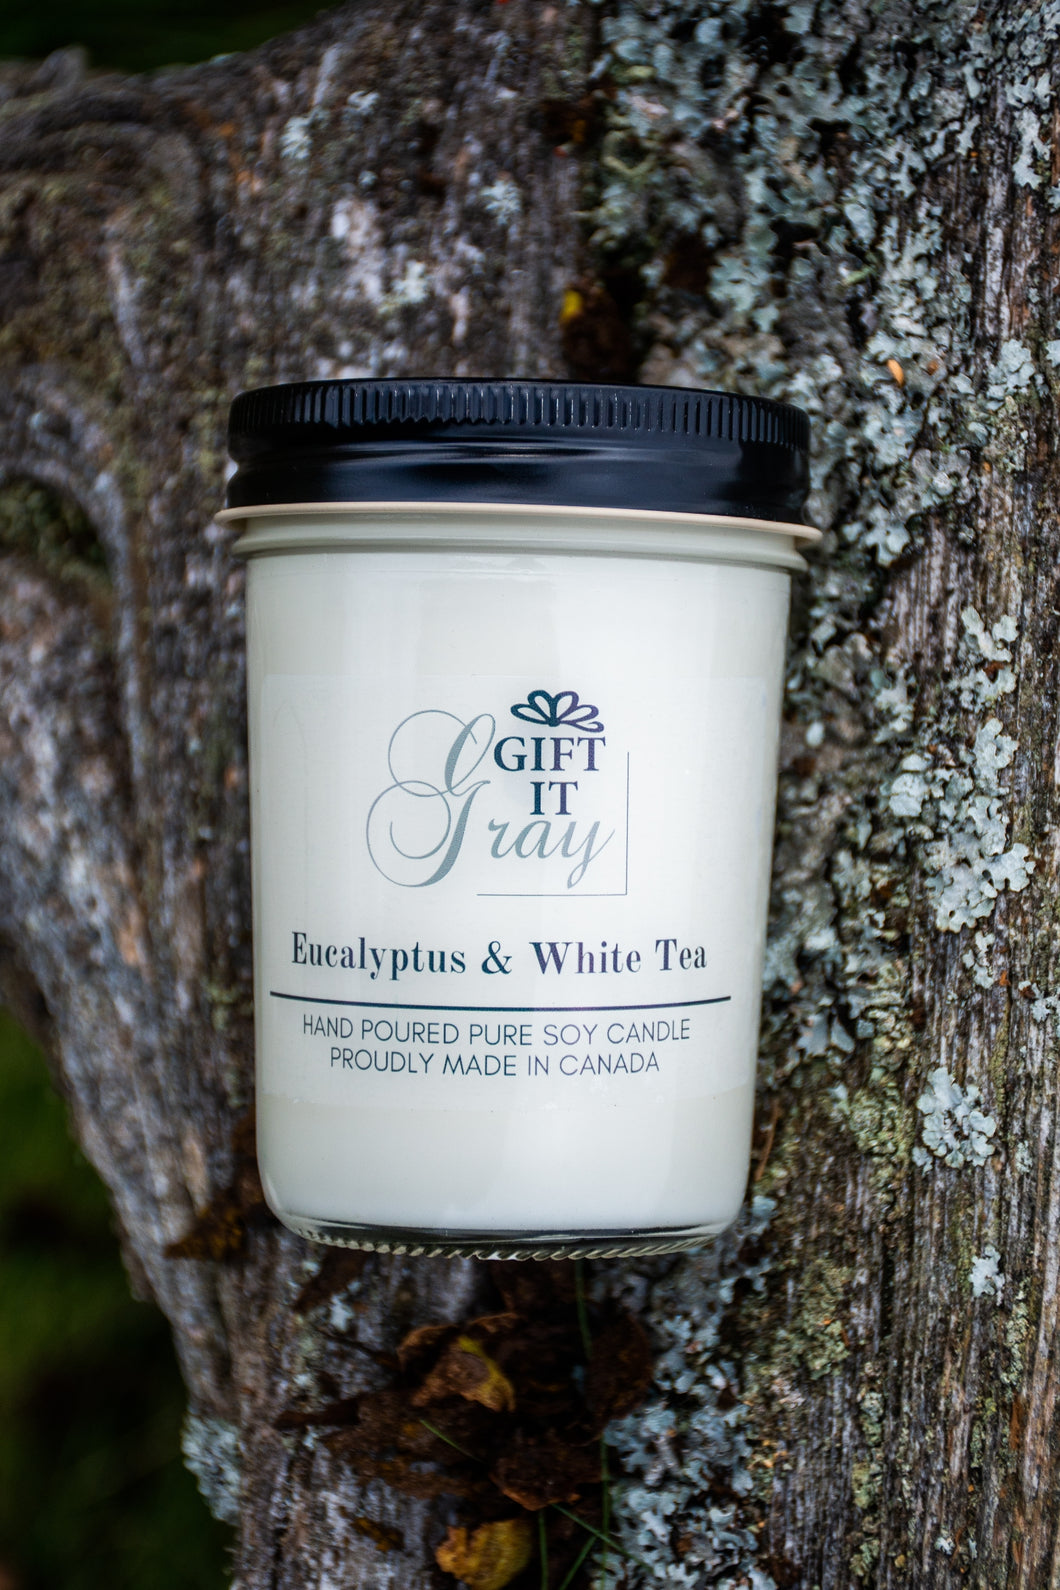 Eucalyptus & White Tea Gift It Gray Soy Candle